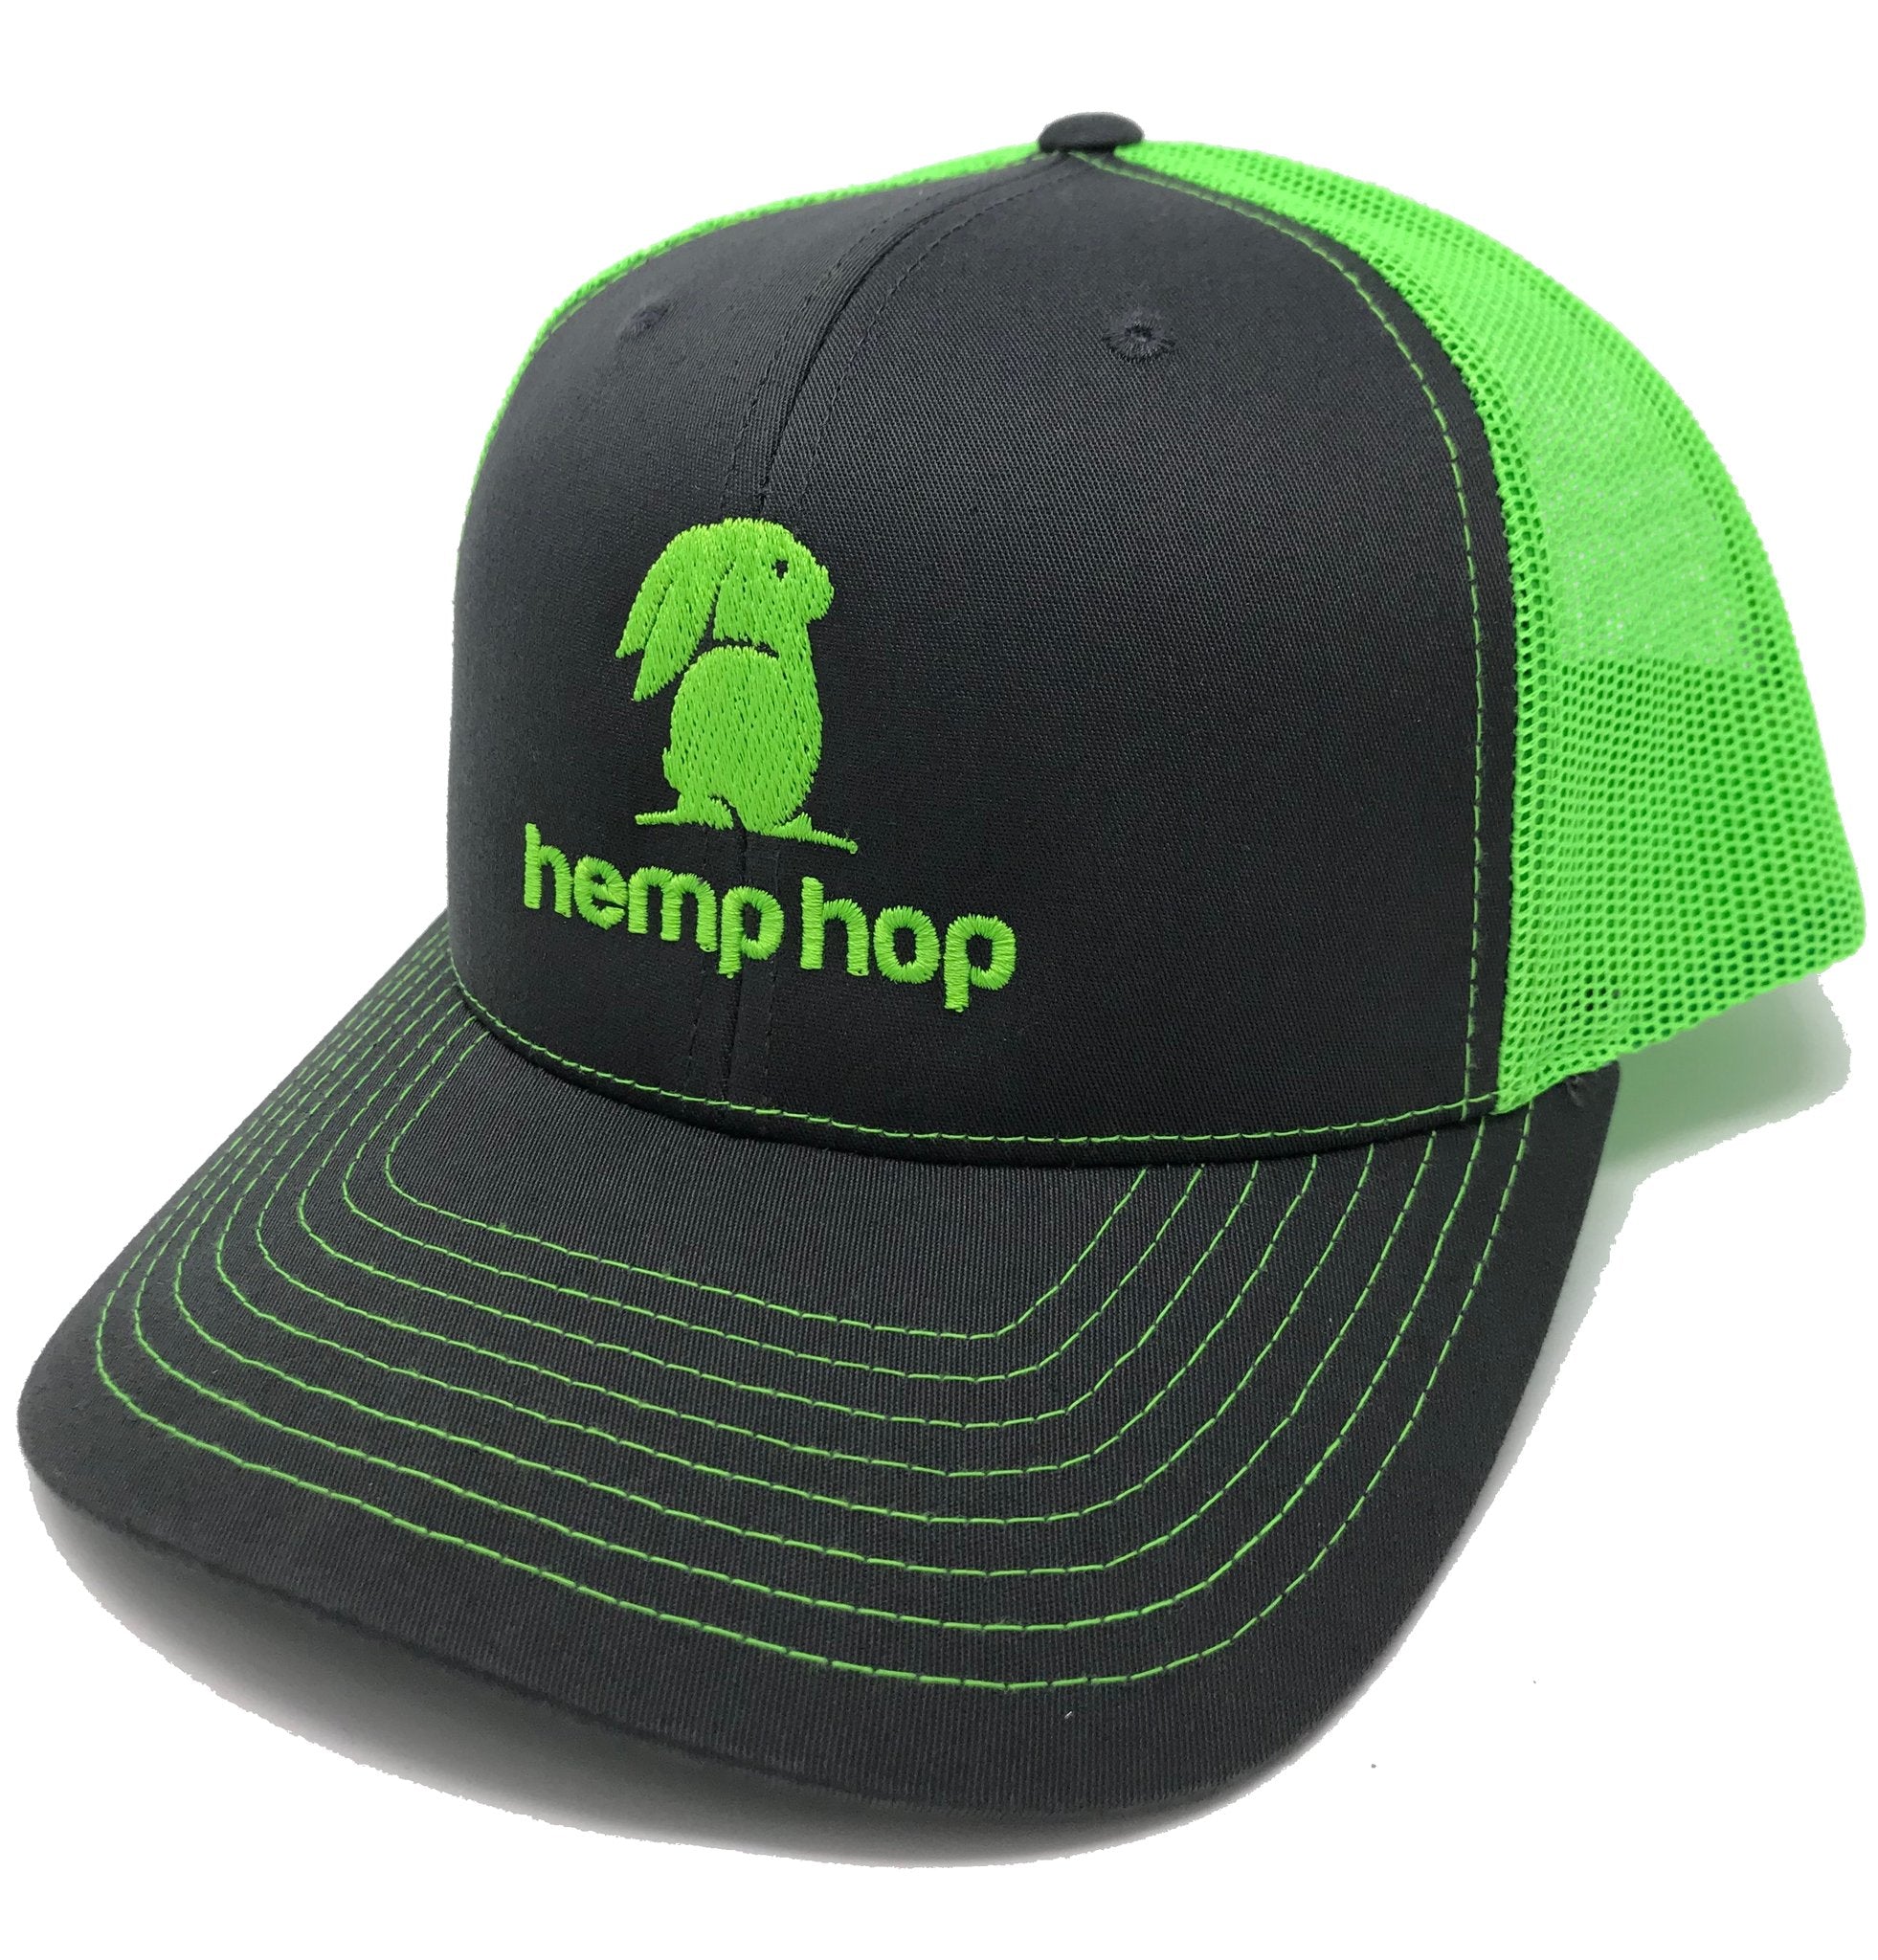 Hemp Hop Products